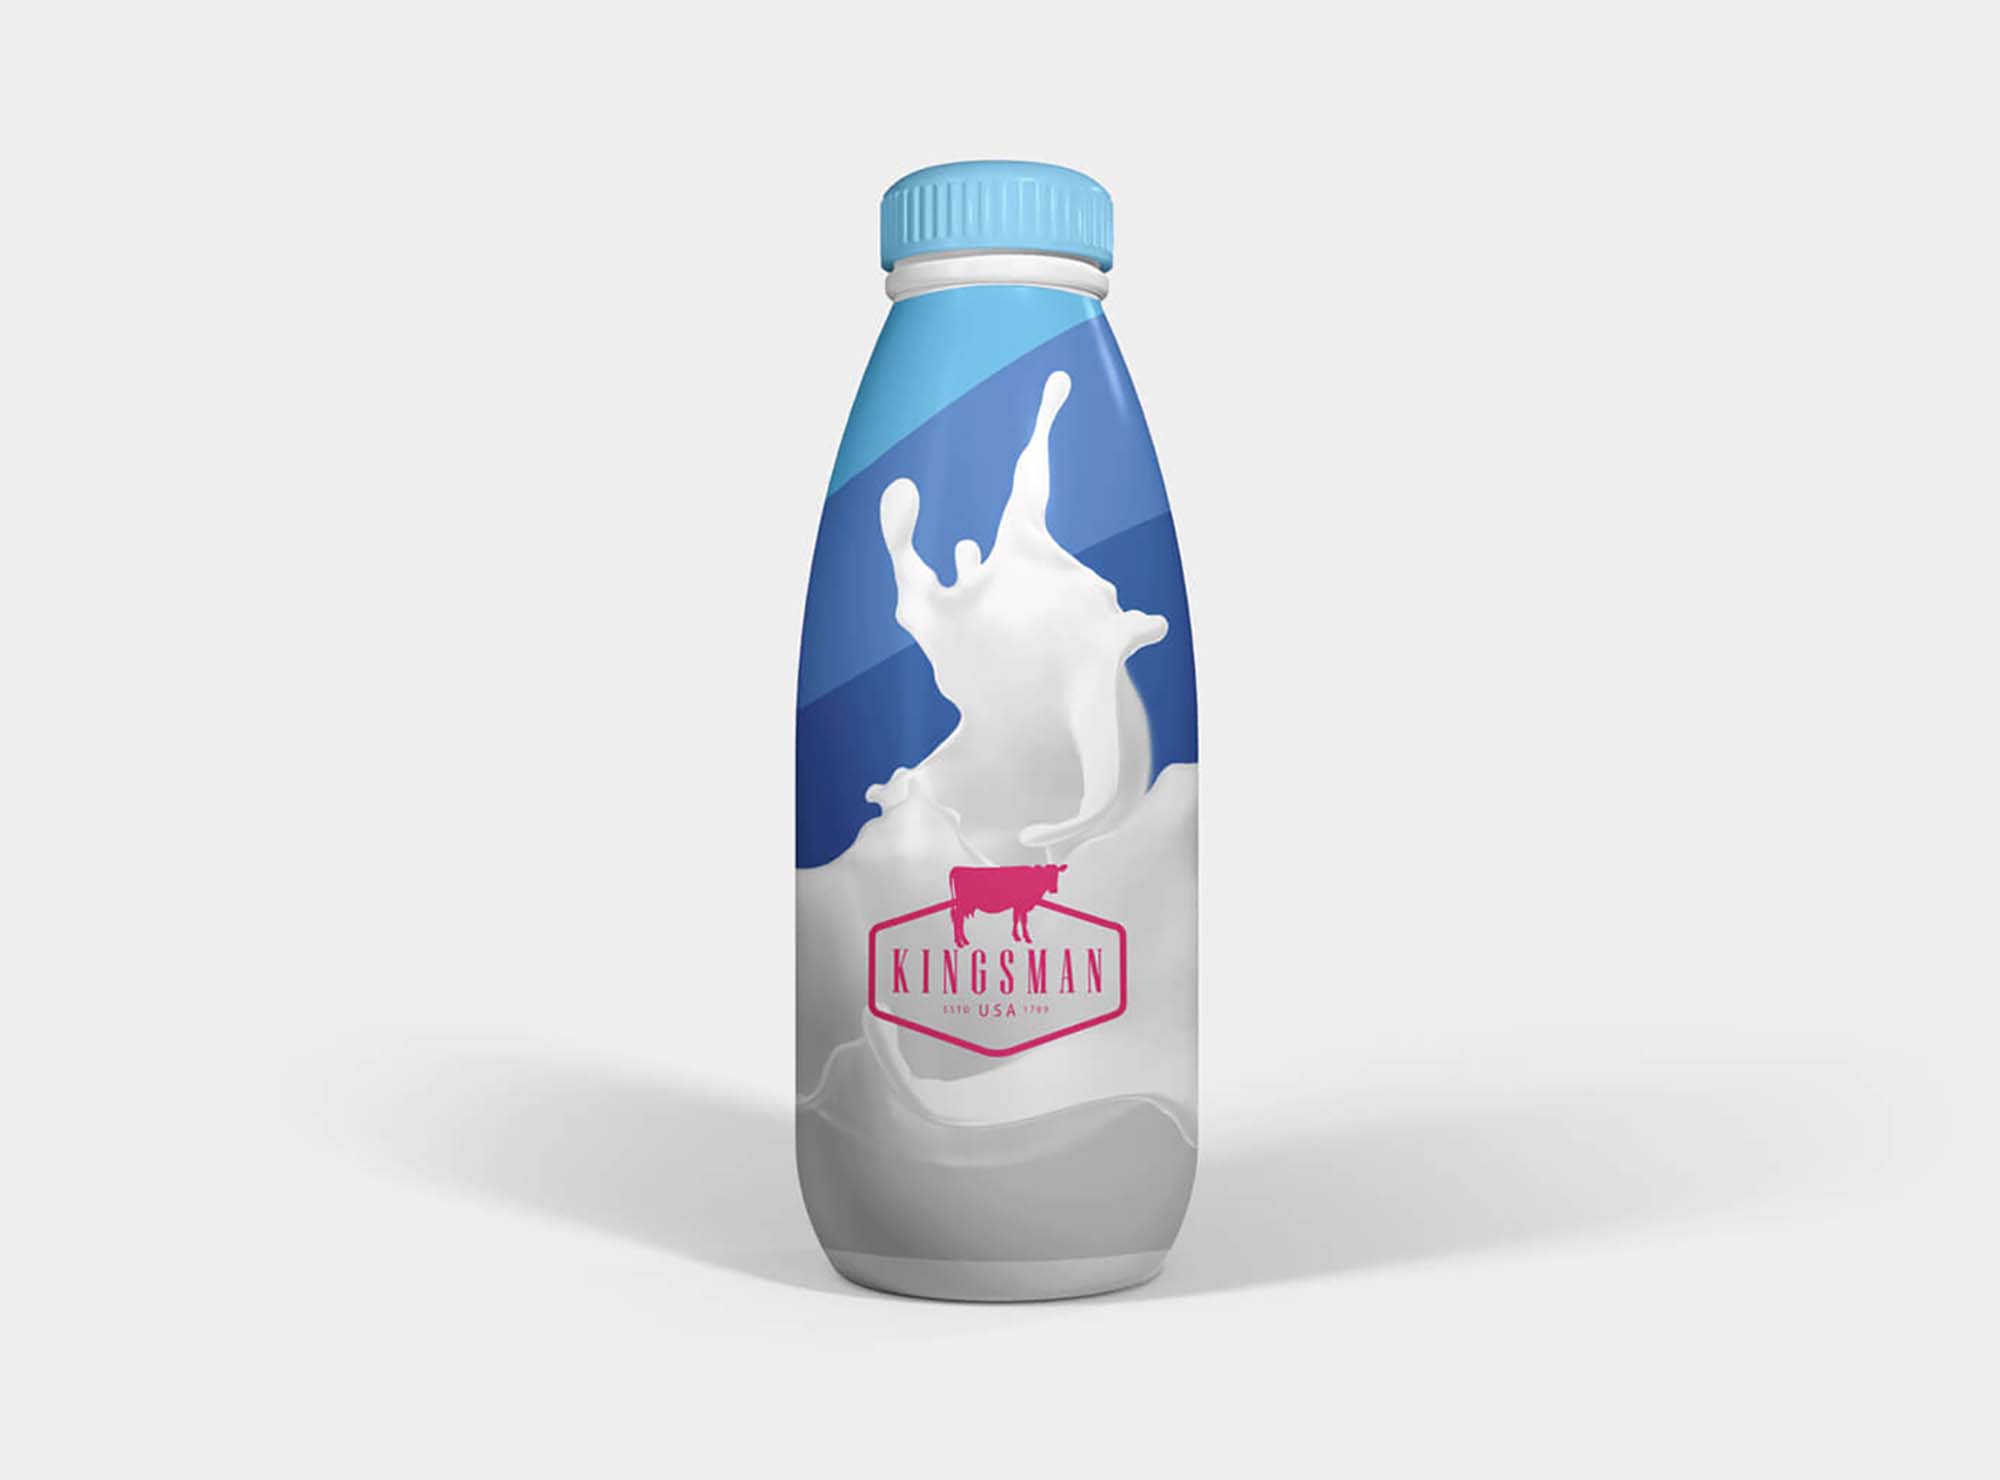 Milk Plastic Bottle Mockup